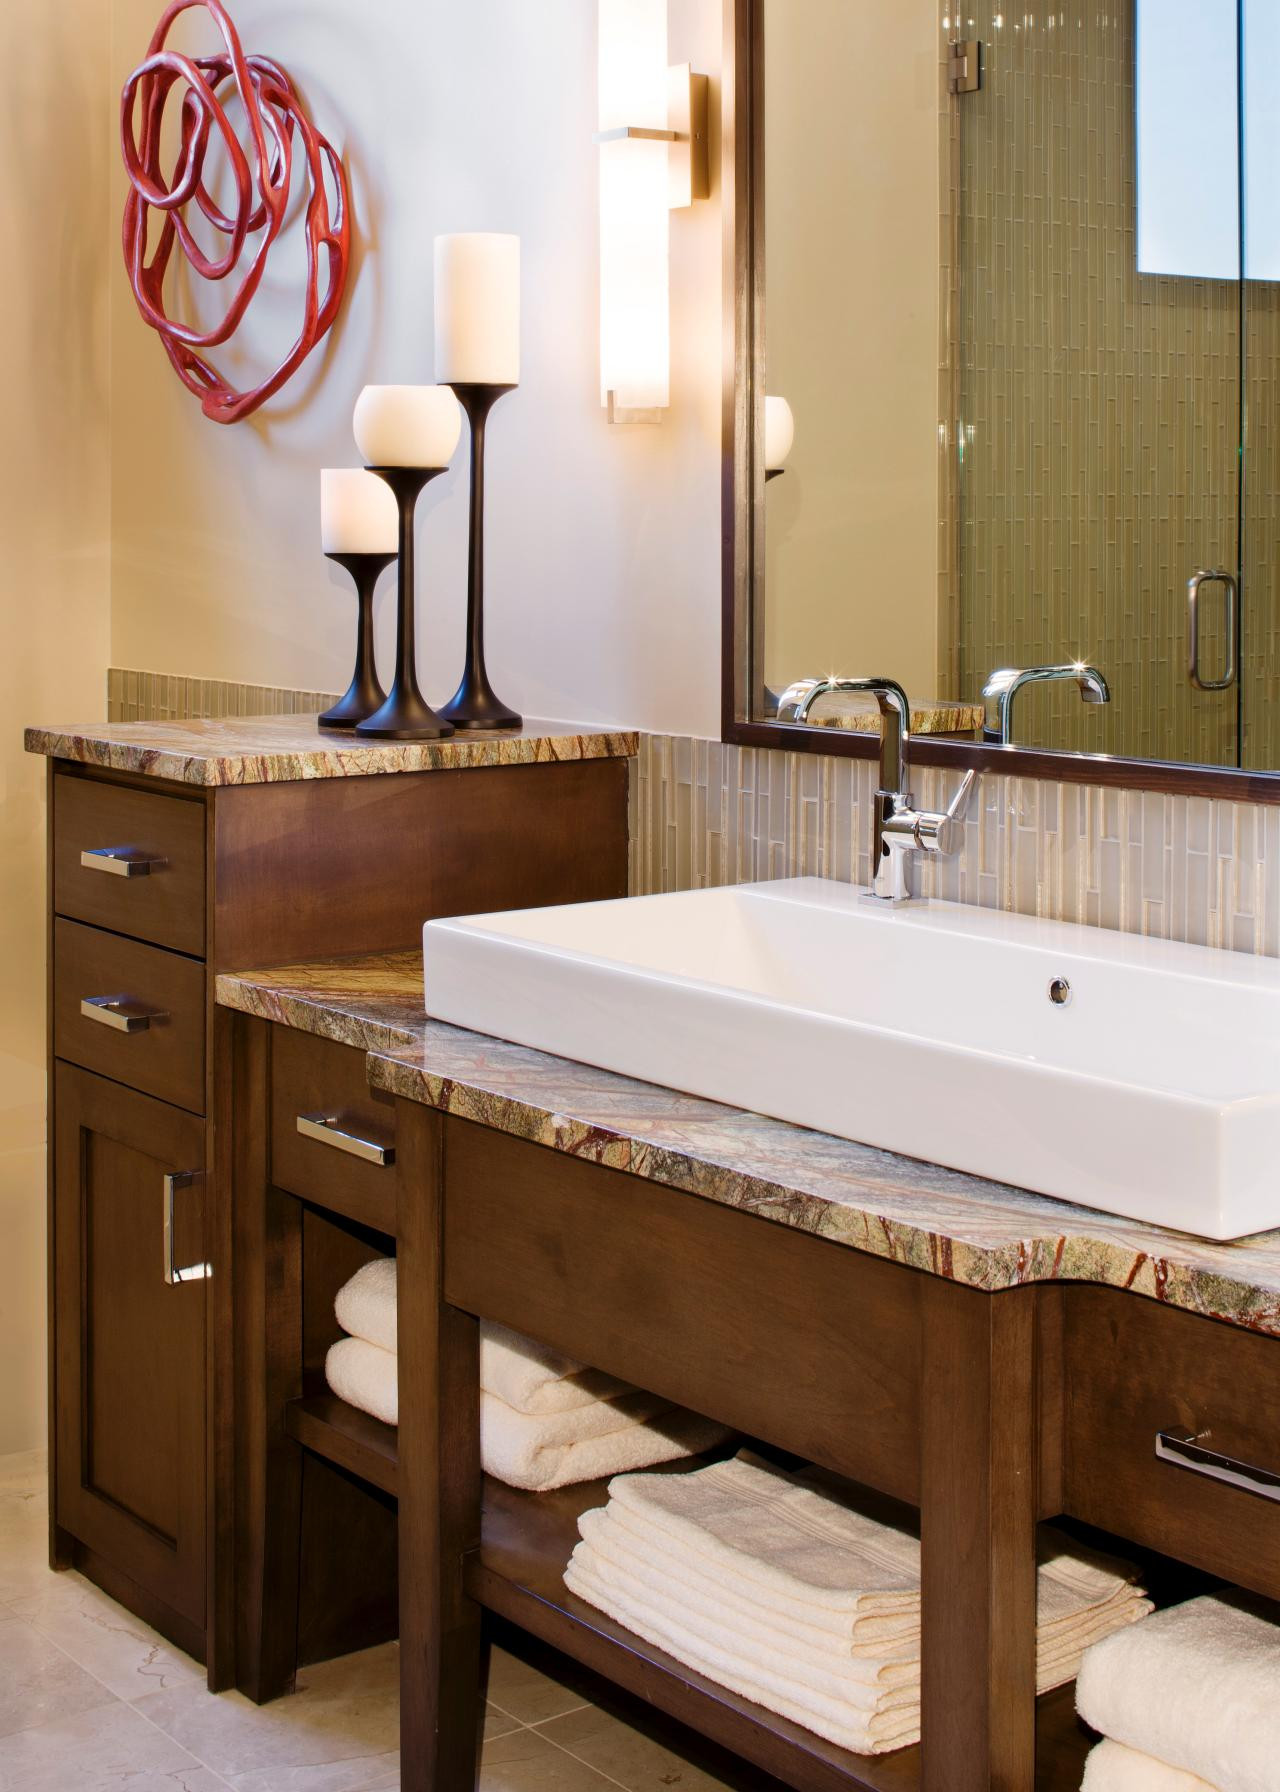 Farm Sink Bathroom Vanity
 Bathroom Farm Sink Product Options – HomesFeed